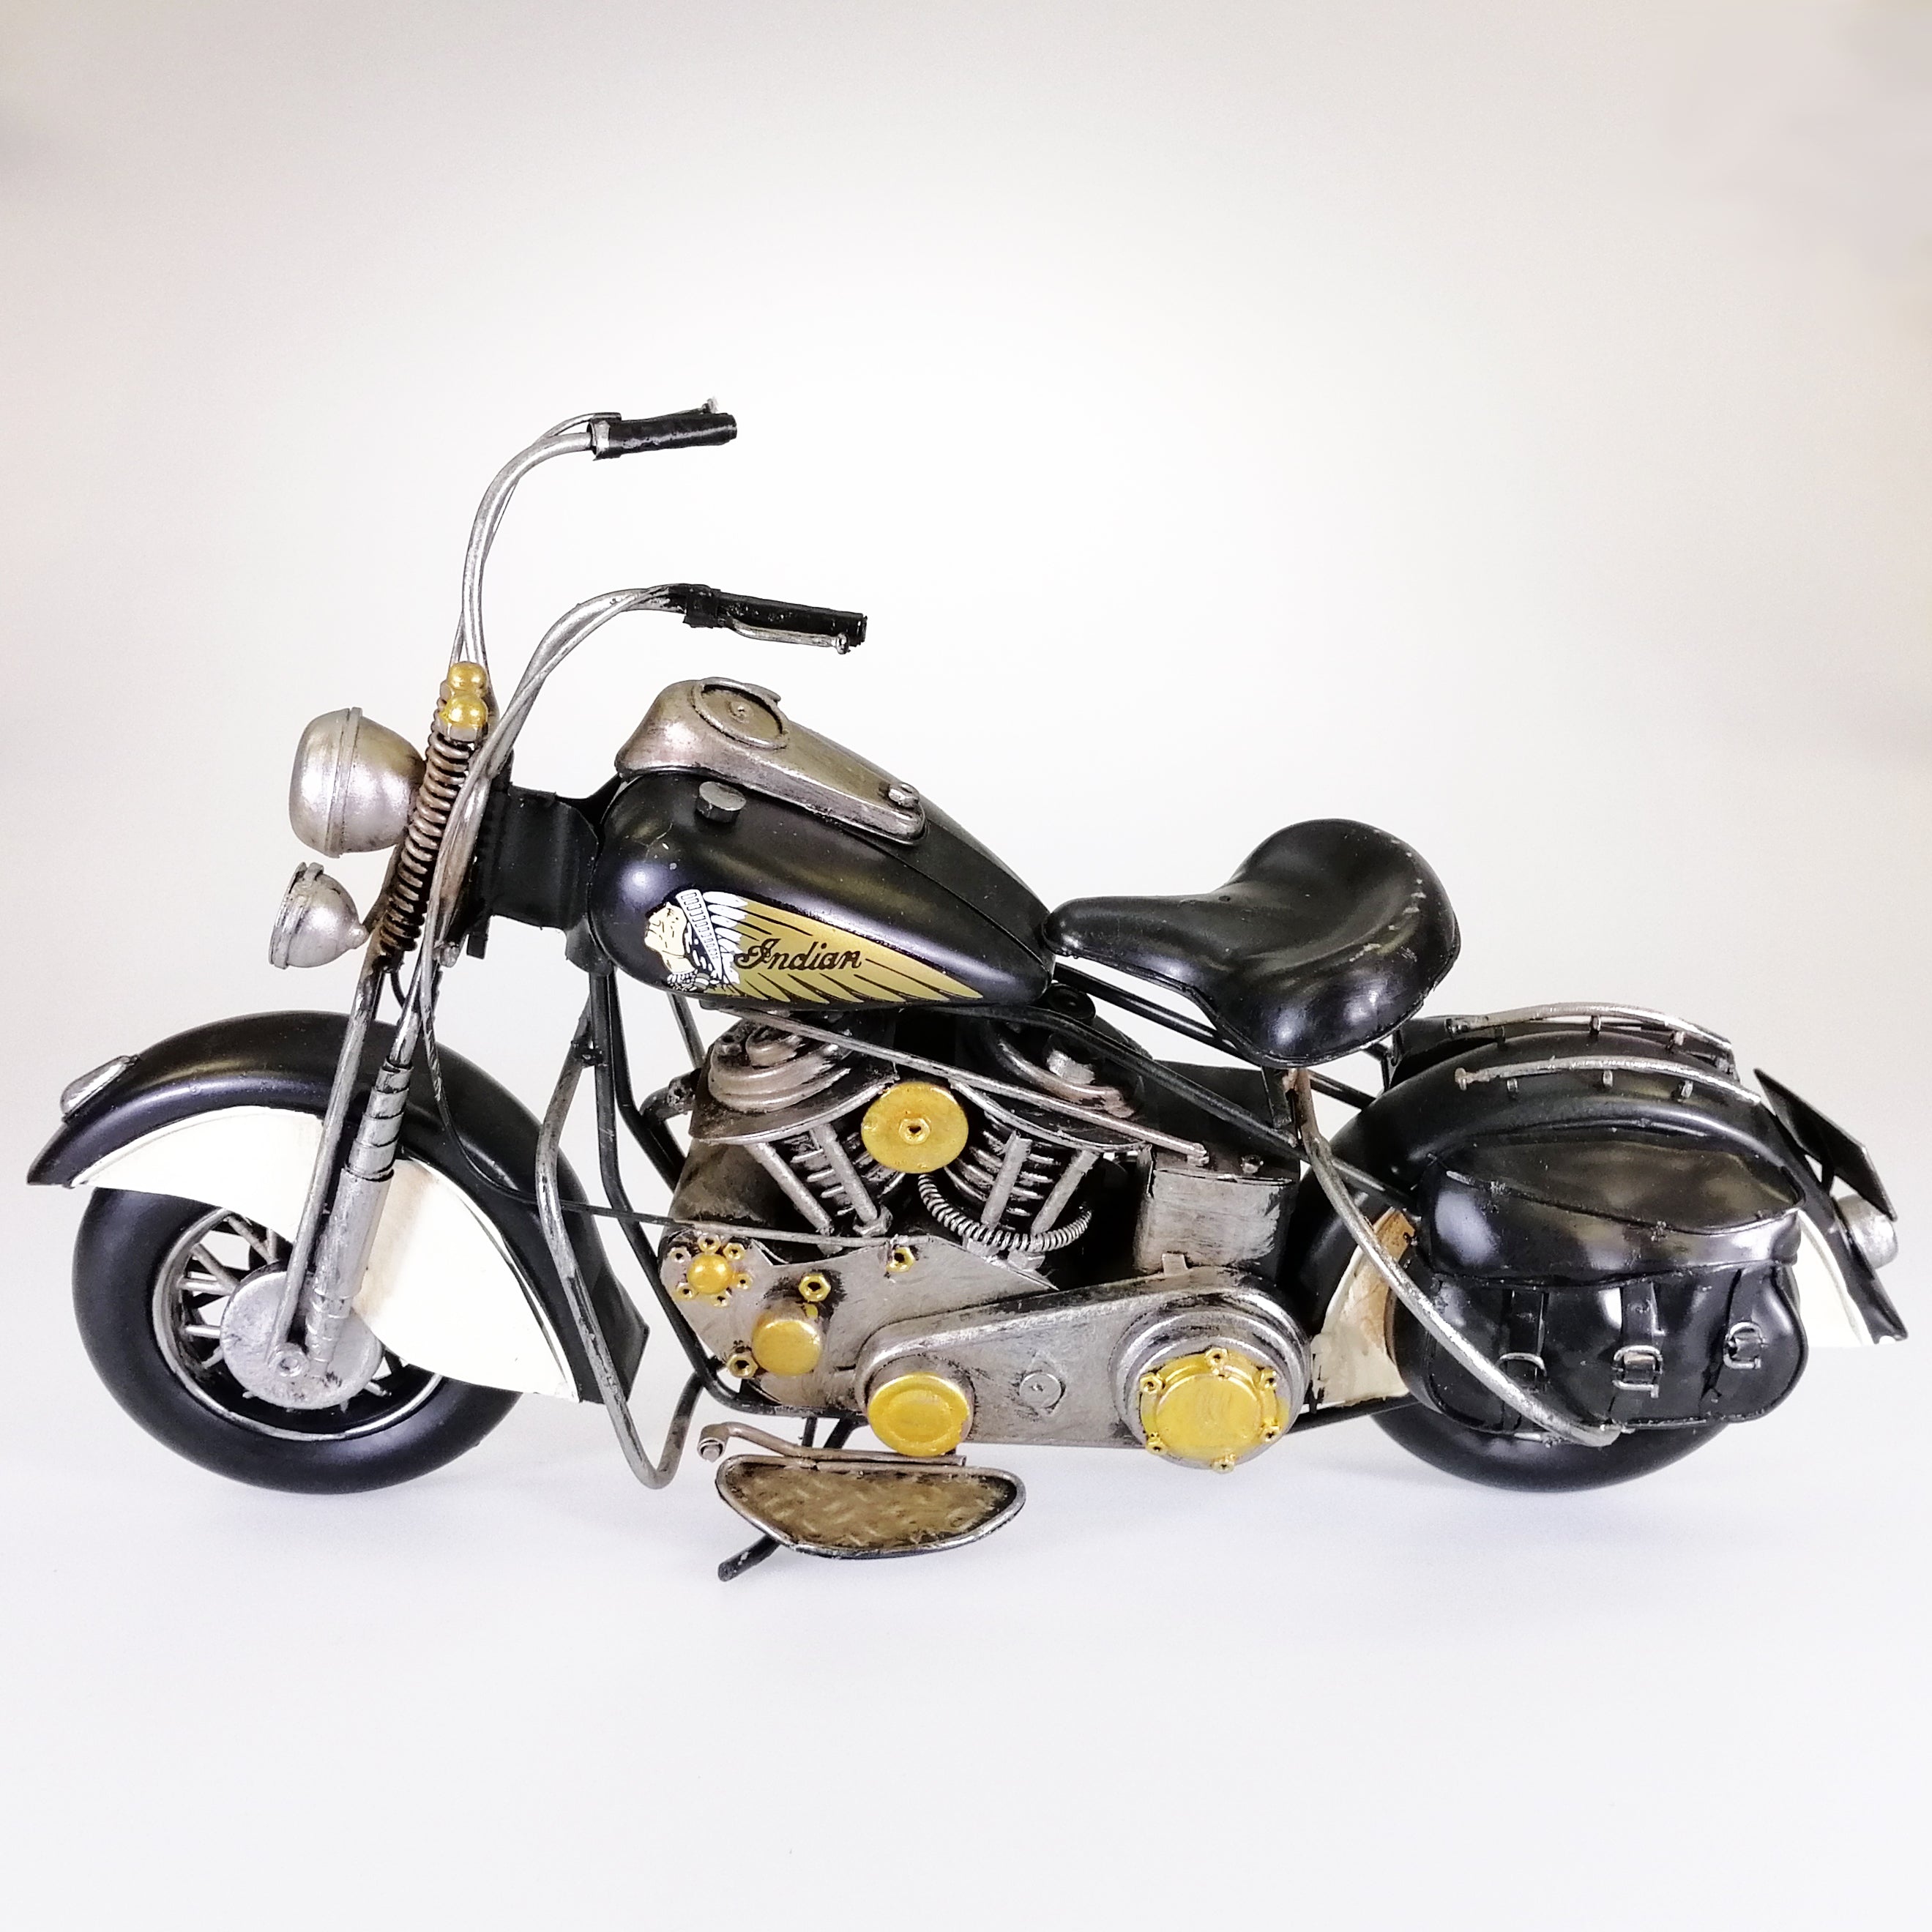 Vintage Indian Motorcycle Sculpture